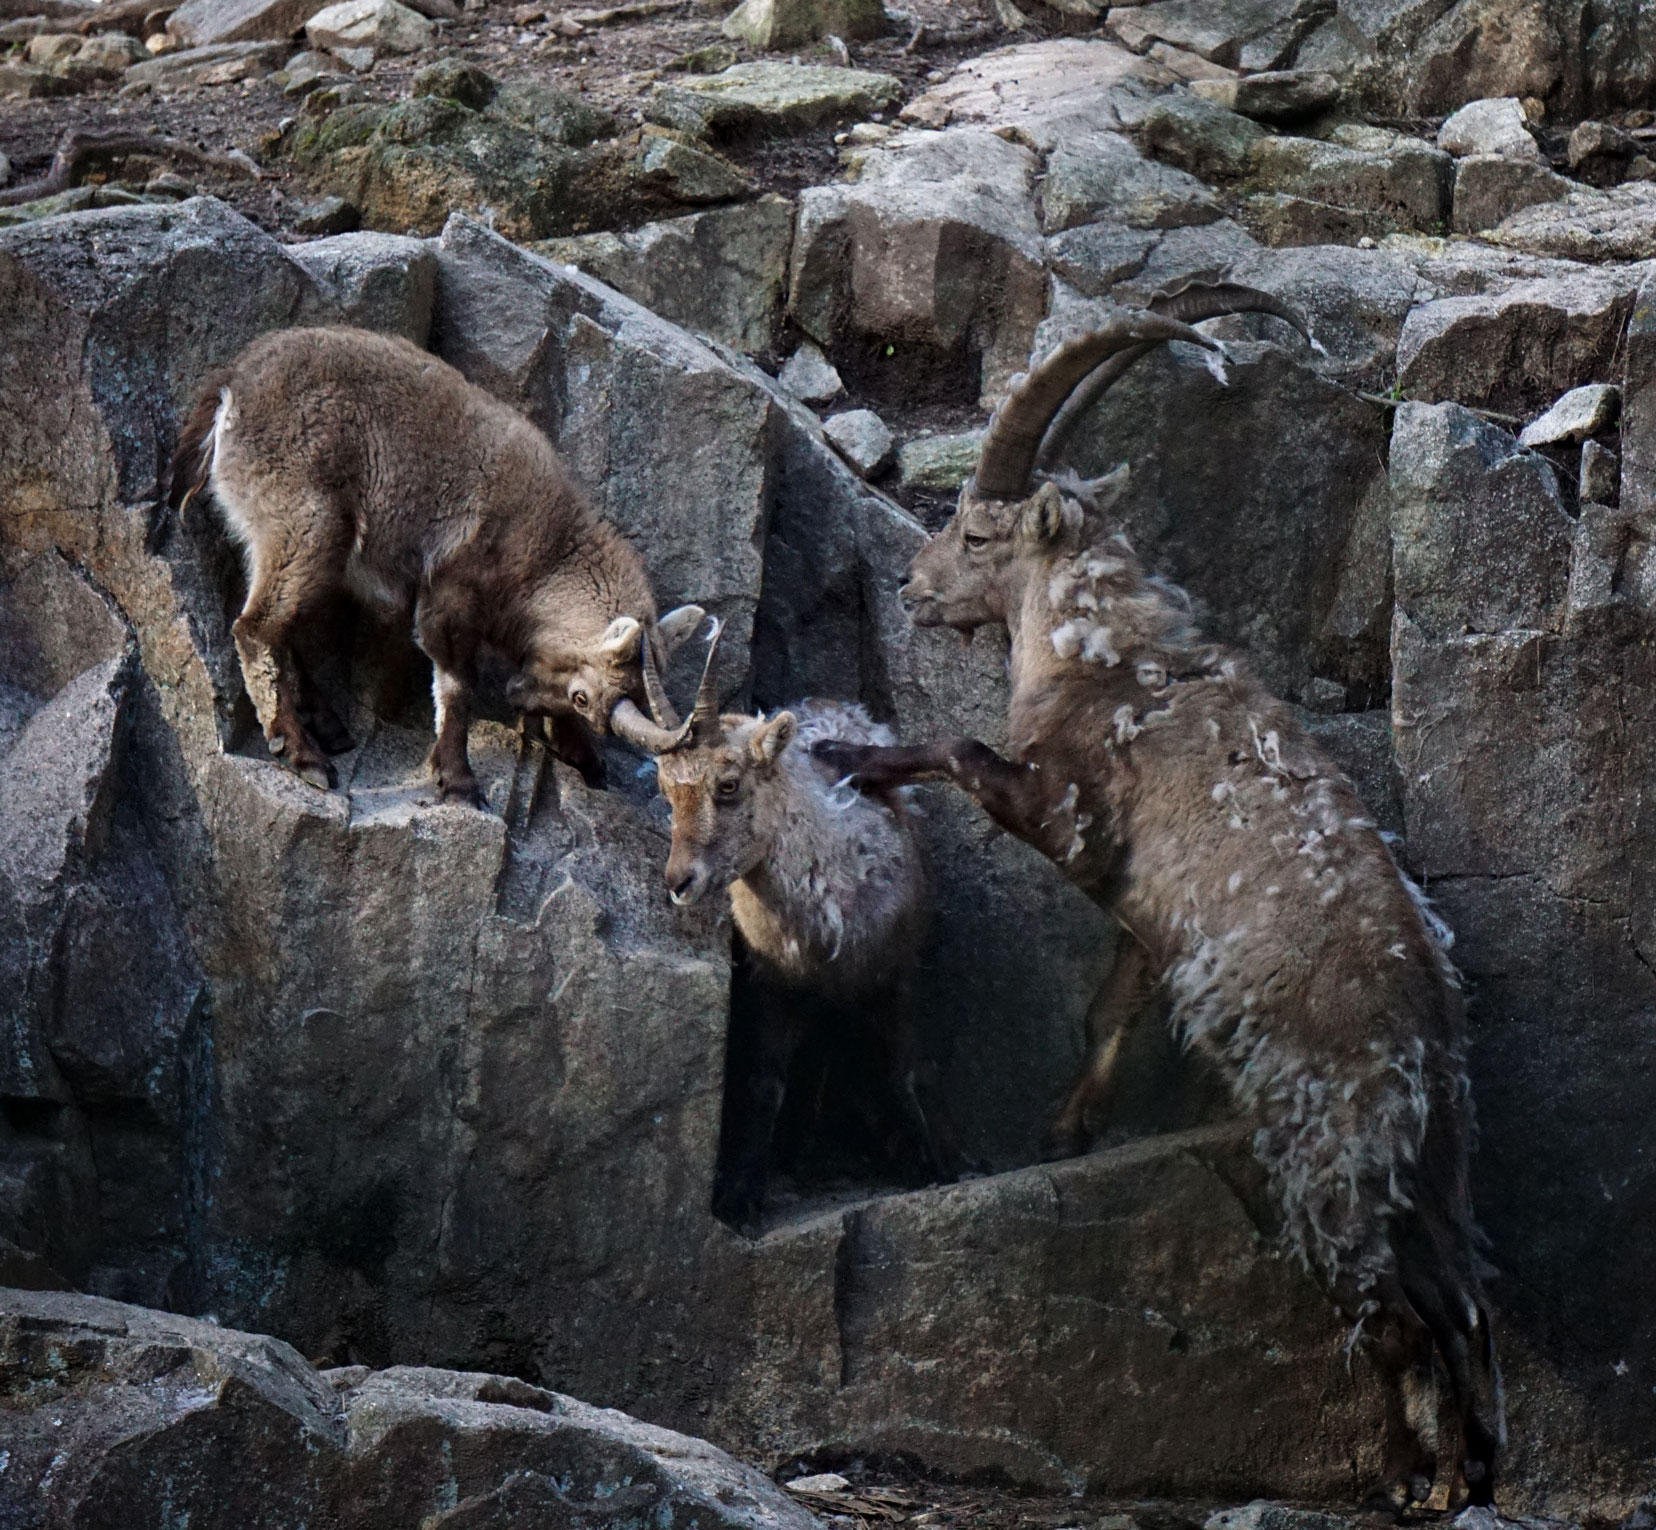 Alpine Mountain goats head butting each other at Parque de Biologico porto